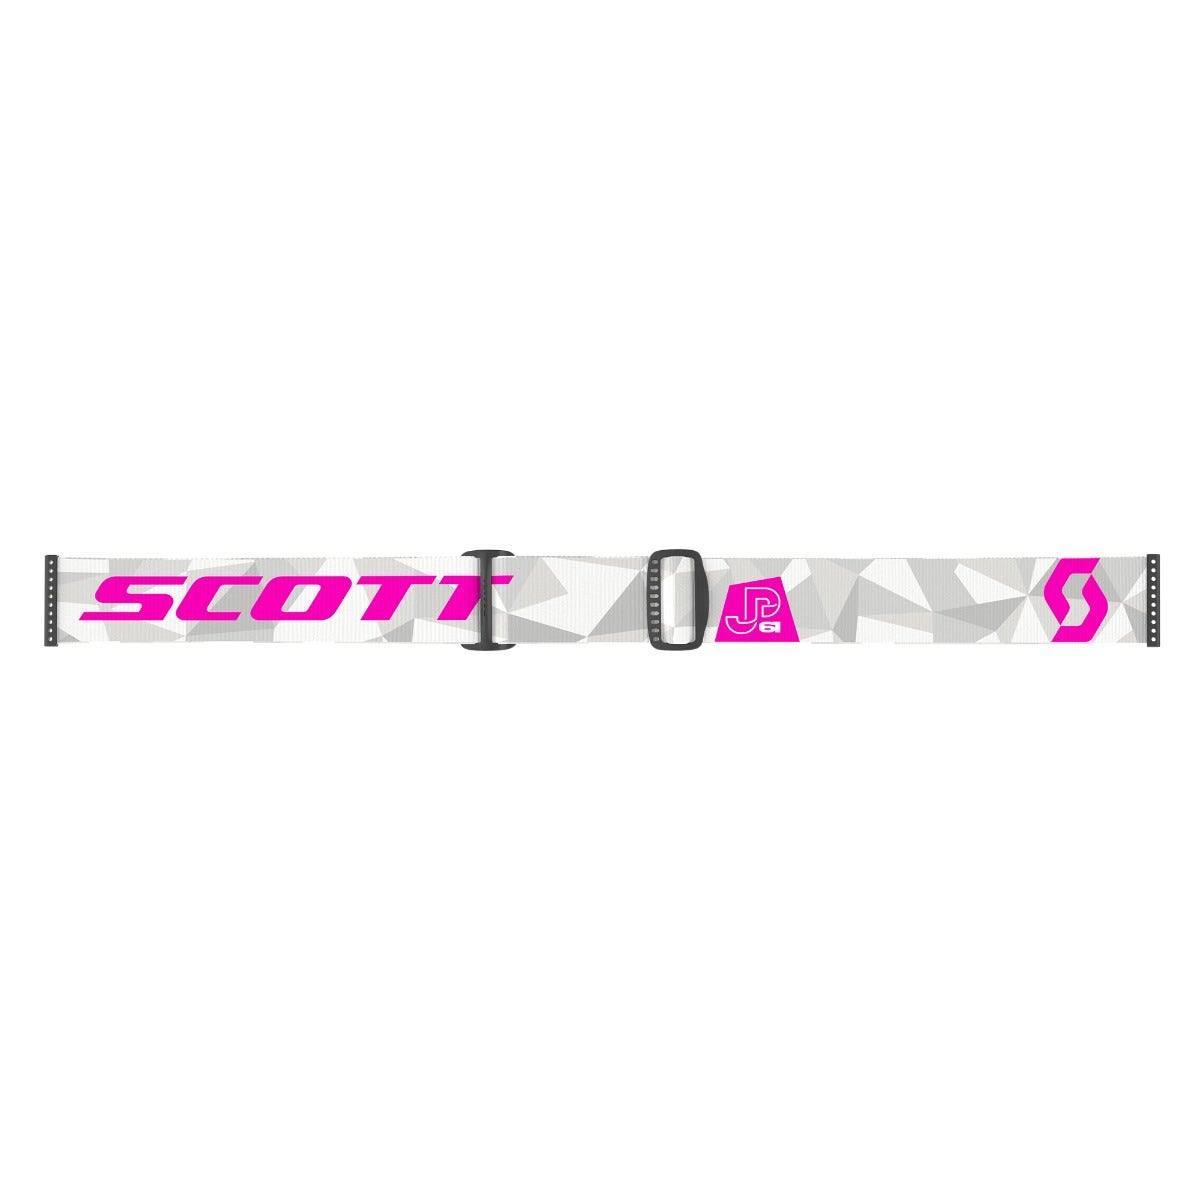 Scott Fury JP61 Goggle - Jorge Padro White/Pink/Pink Chrome